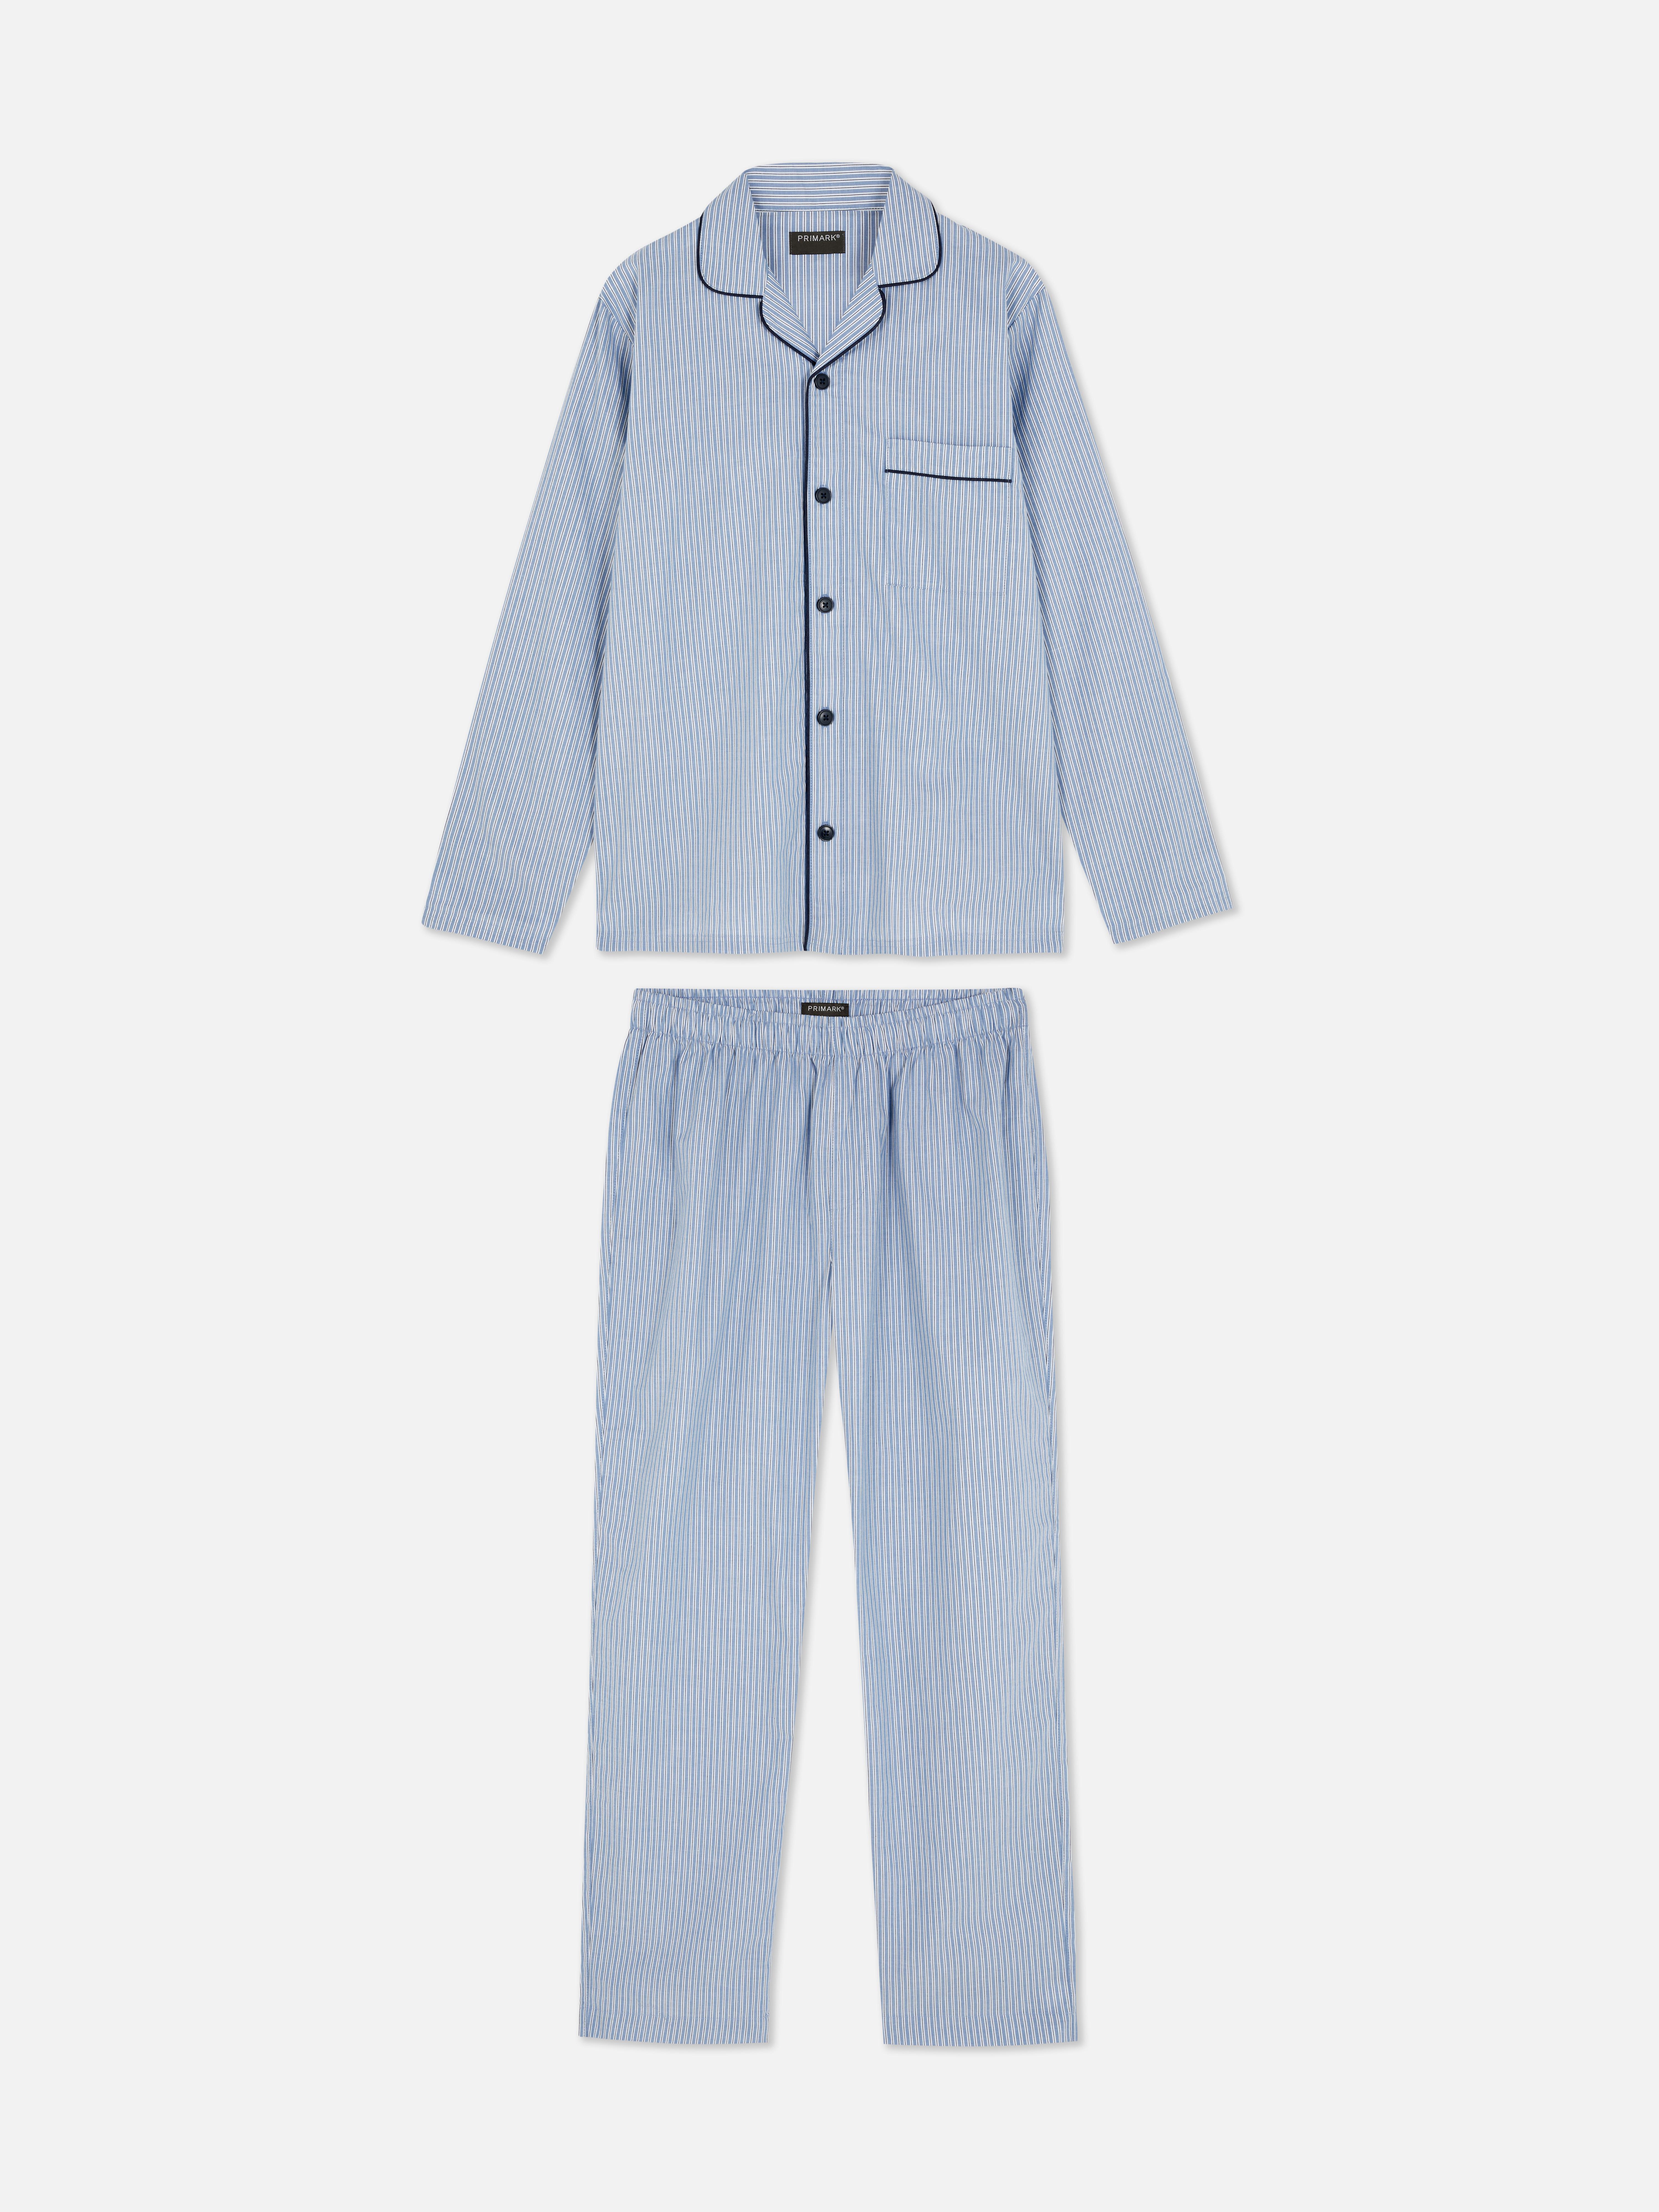 Pijama popelina clássico